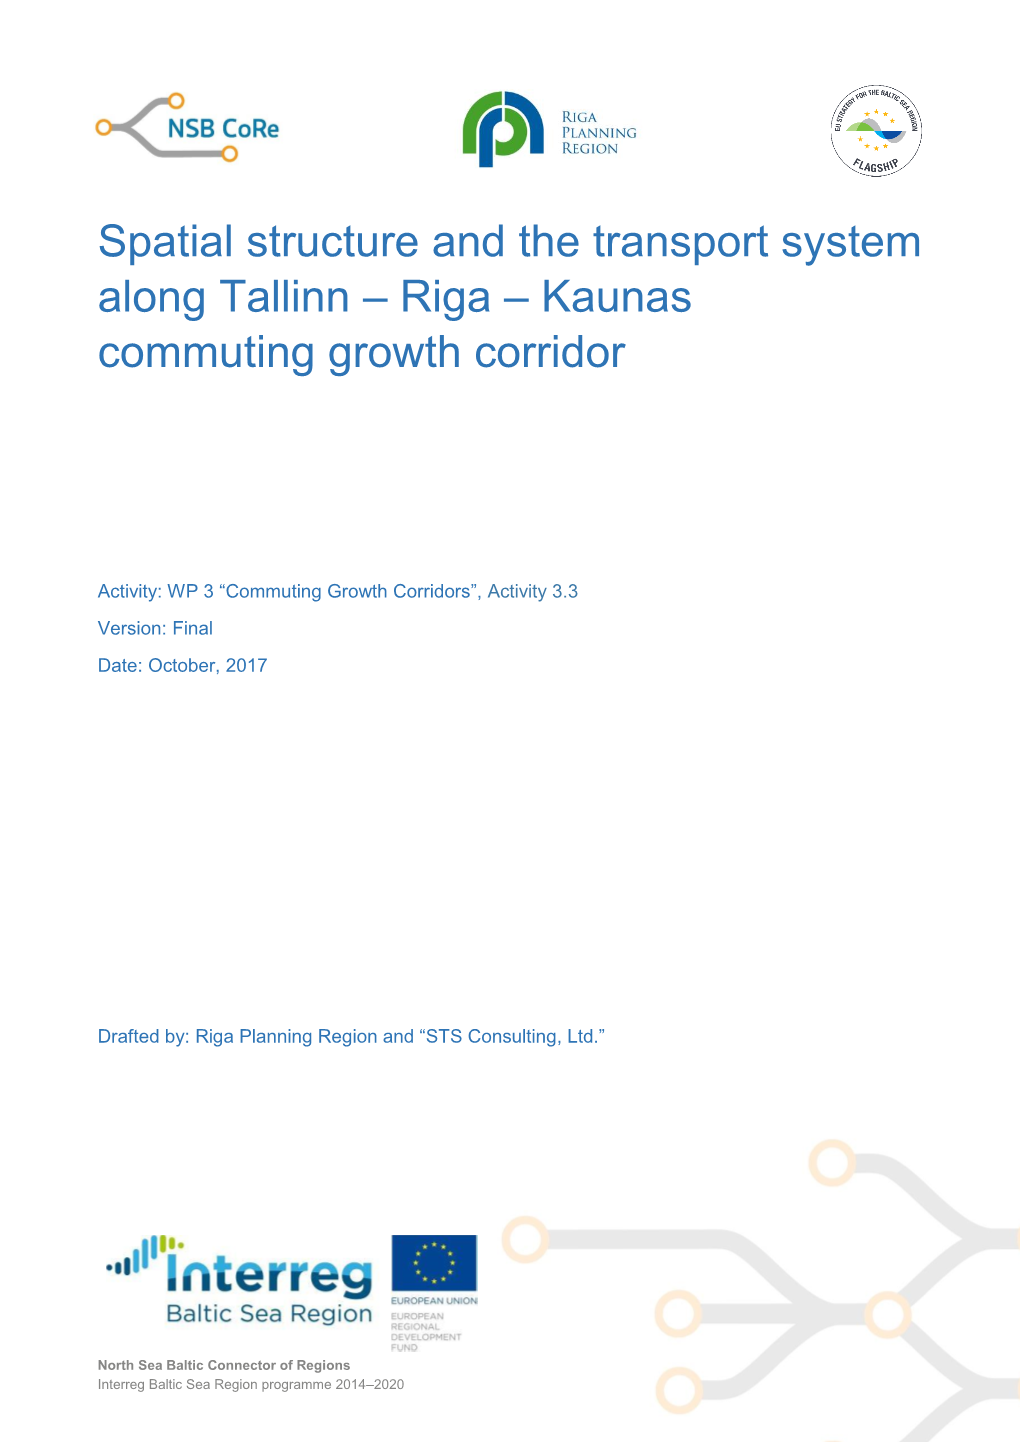 Spatial Structure and the Transport System Along Tallinn – Riga – Kaunas Commuting Growth Corridor